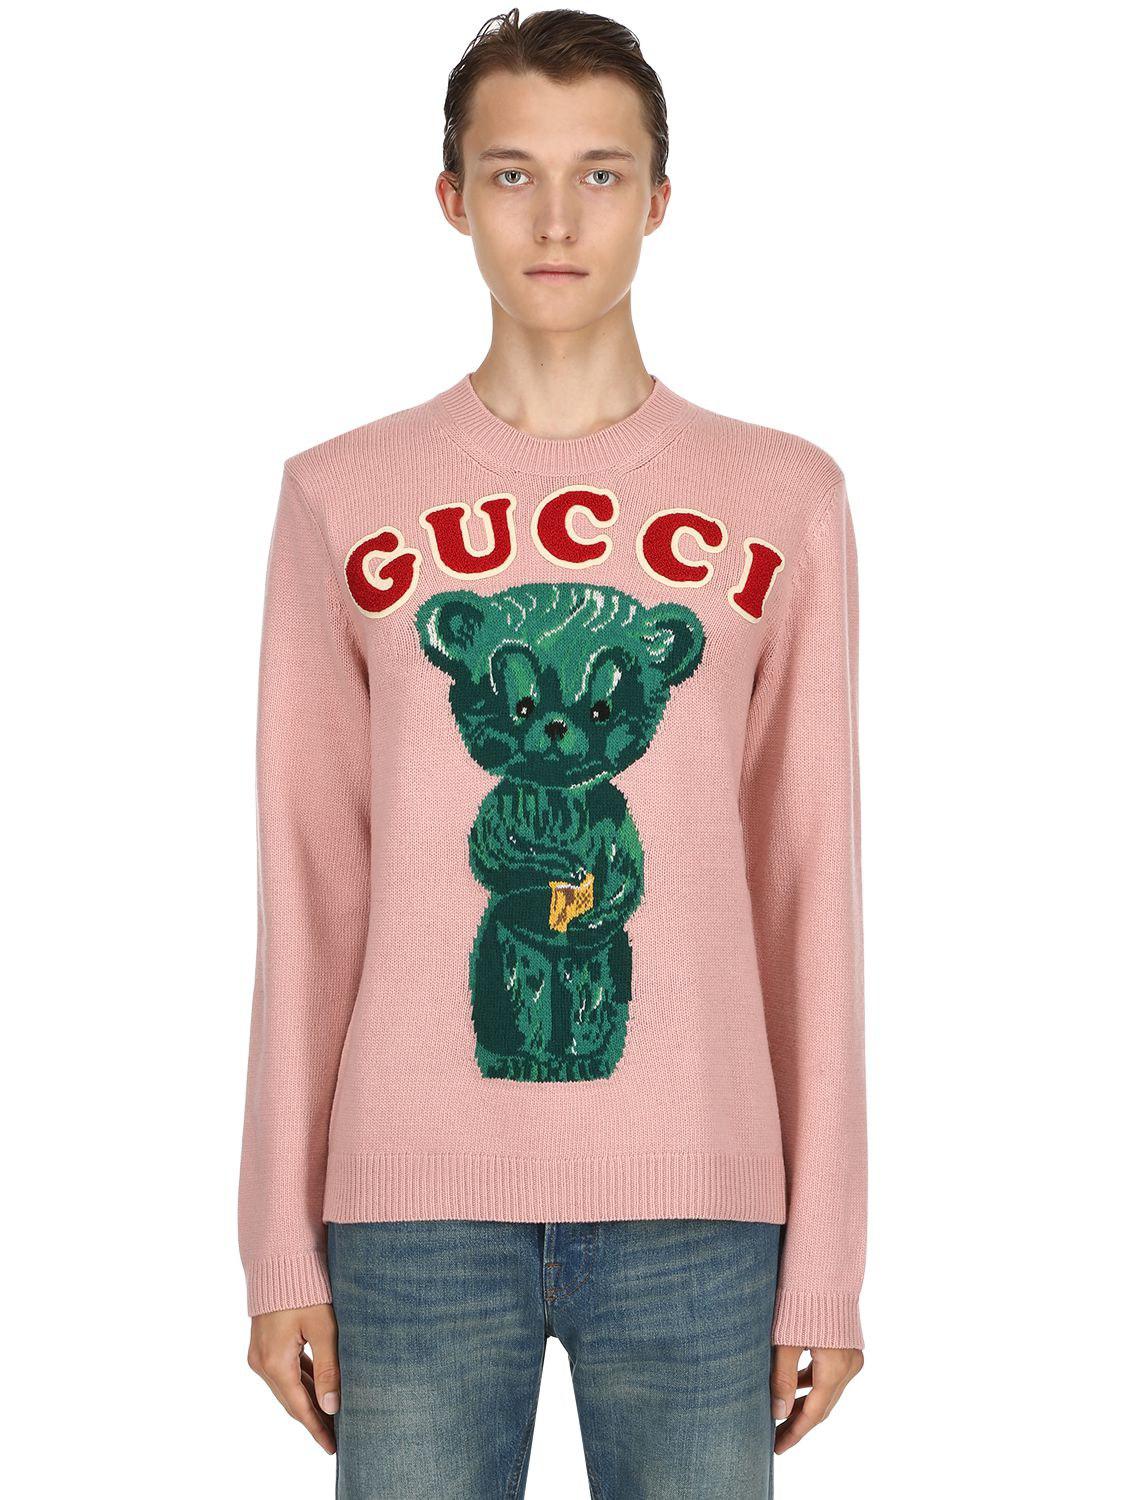 Gucci Felted Jersey Sweatshirt with Teddy Bear - Bergdorf Goodman